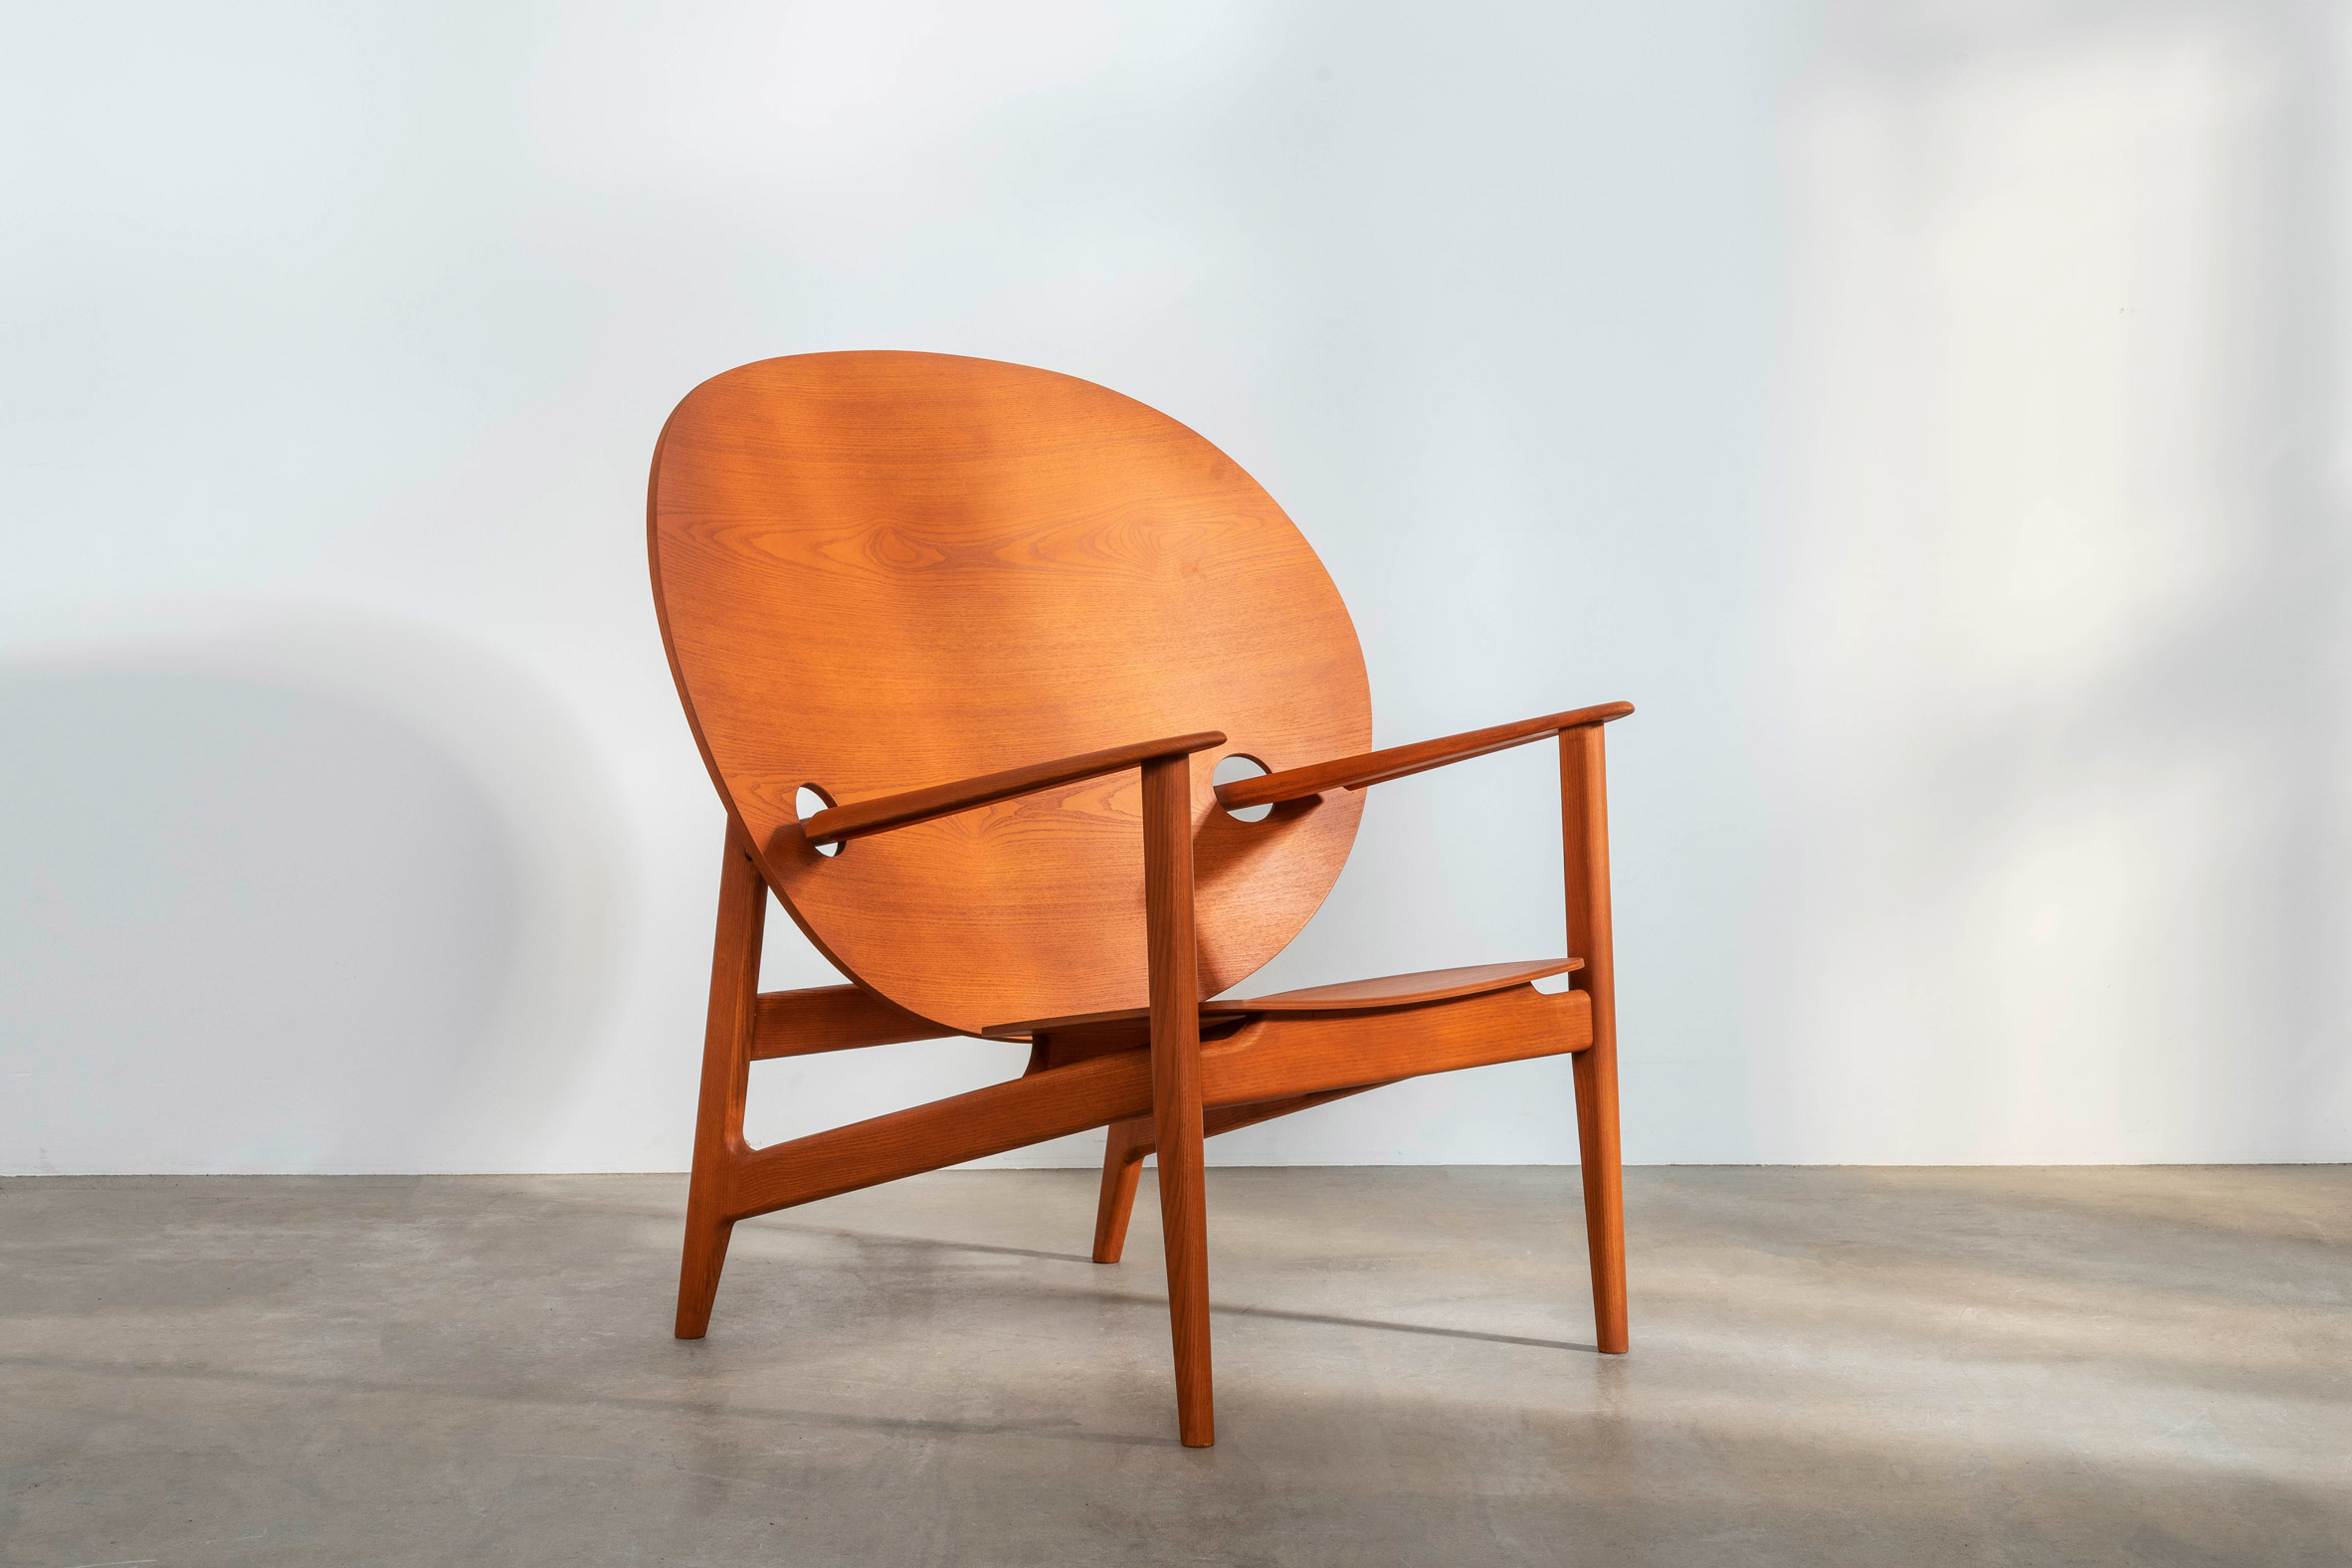 The Iklwa chair for Benchmark in orange